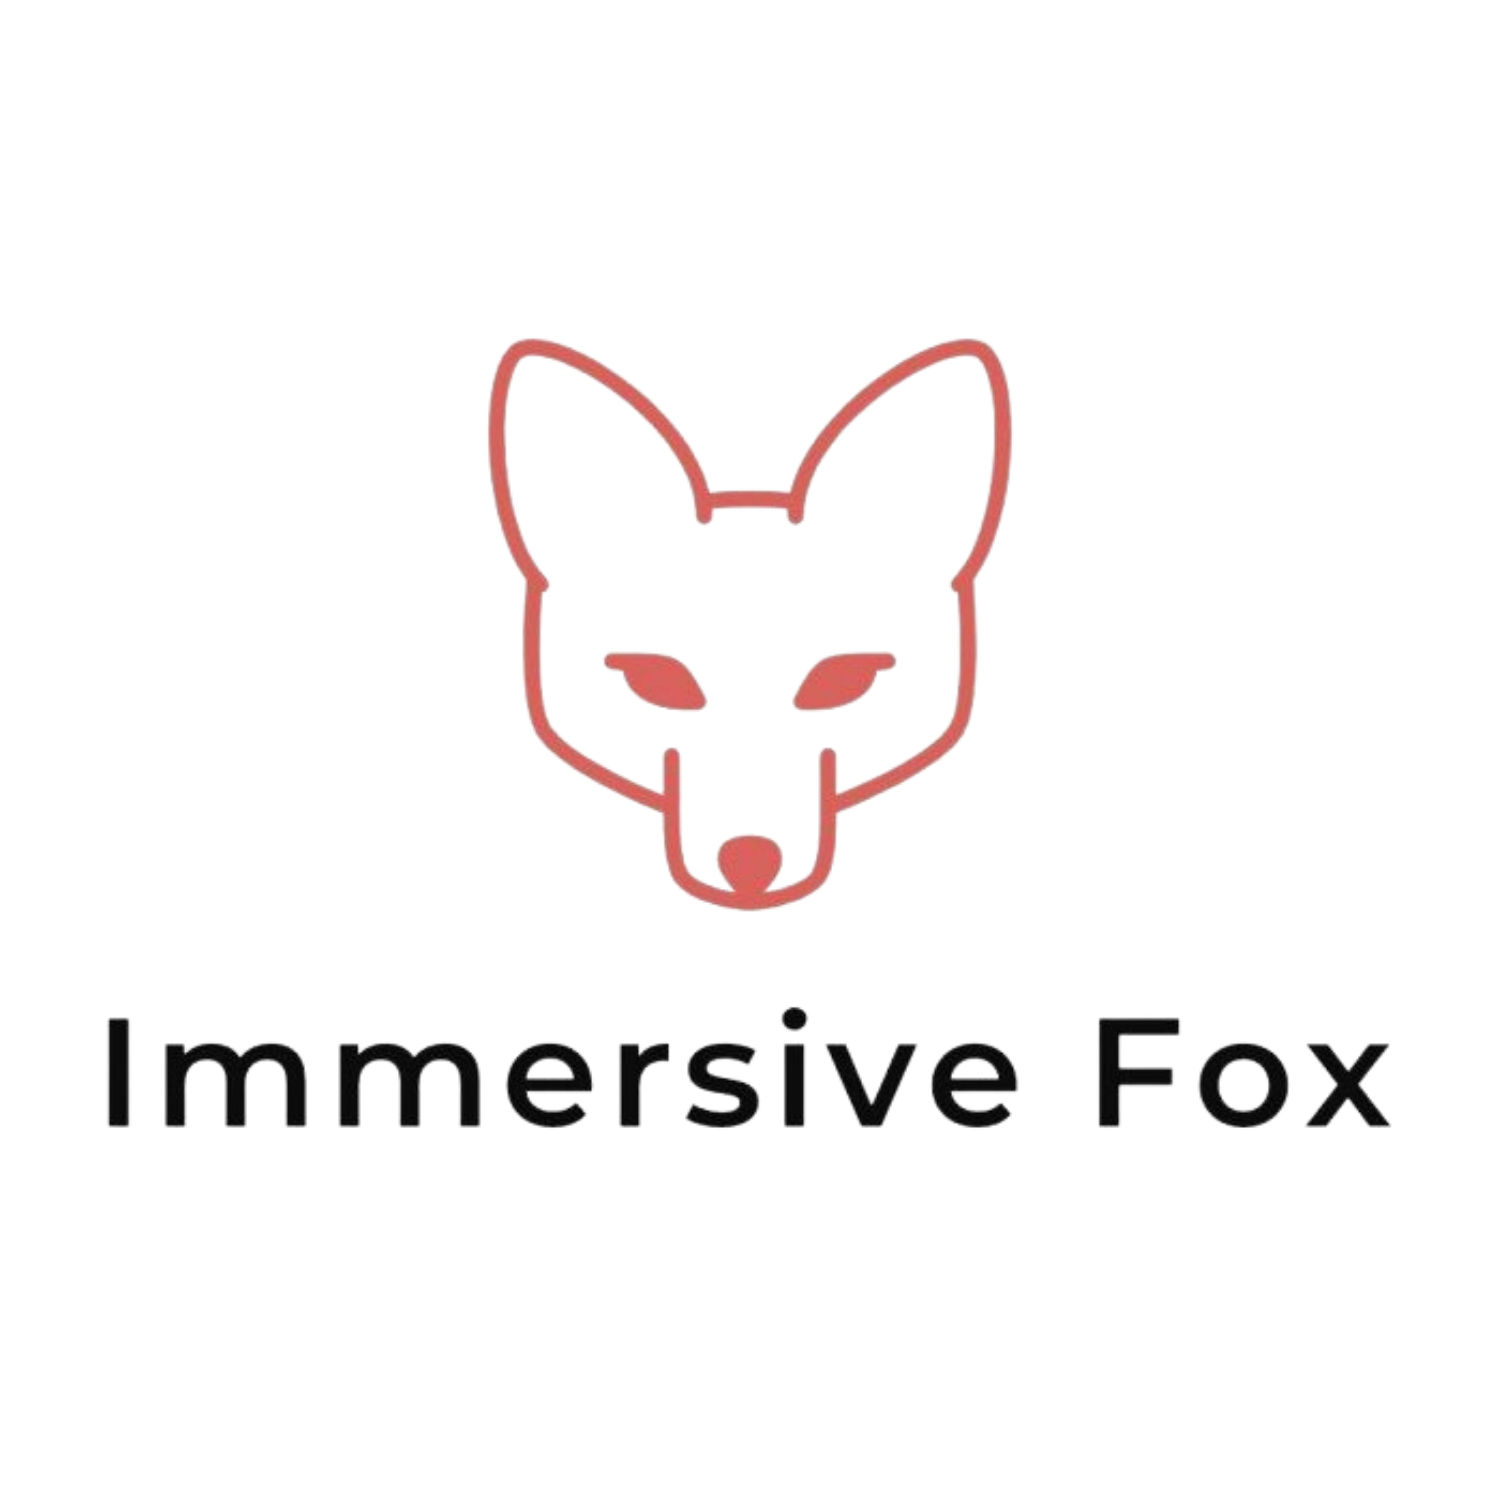 Fox org. Авто Fox логотип.